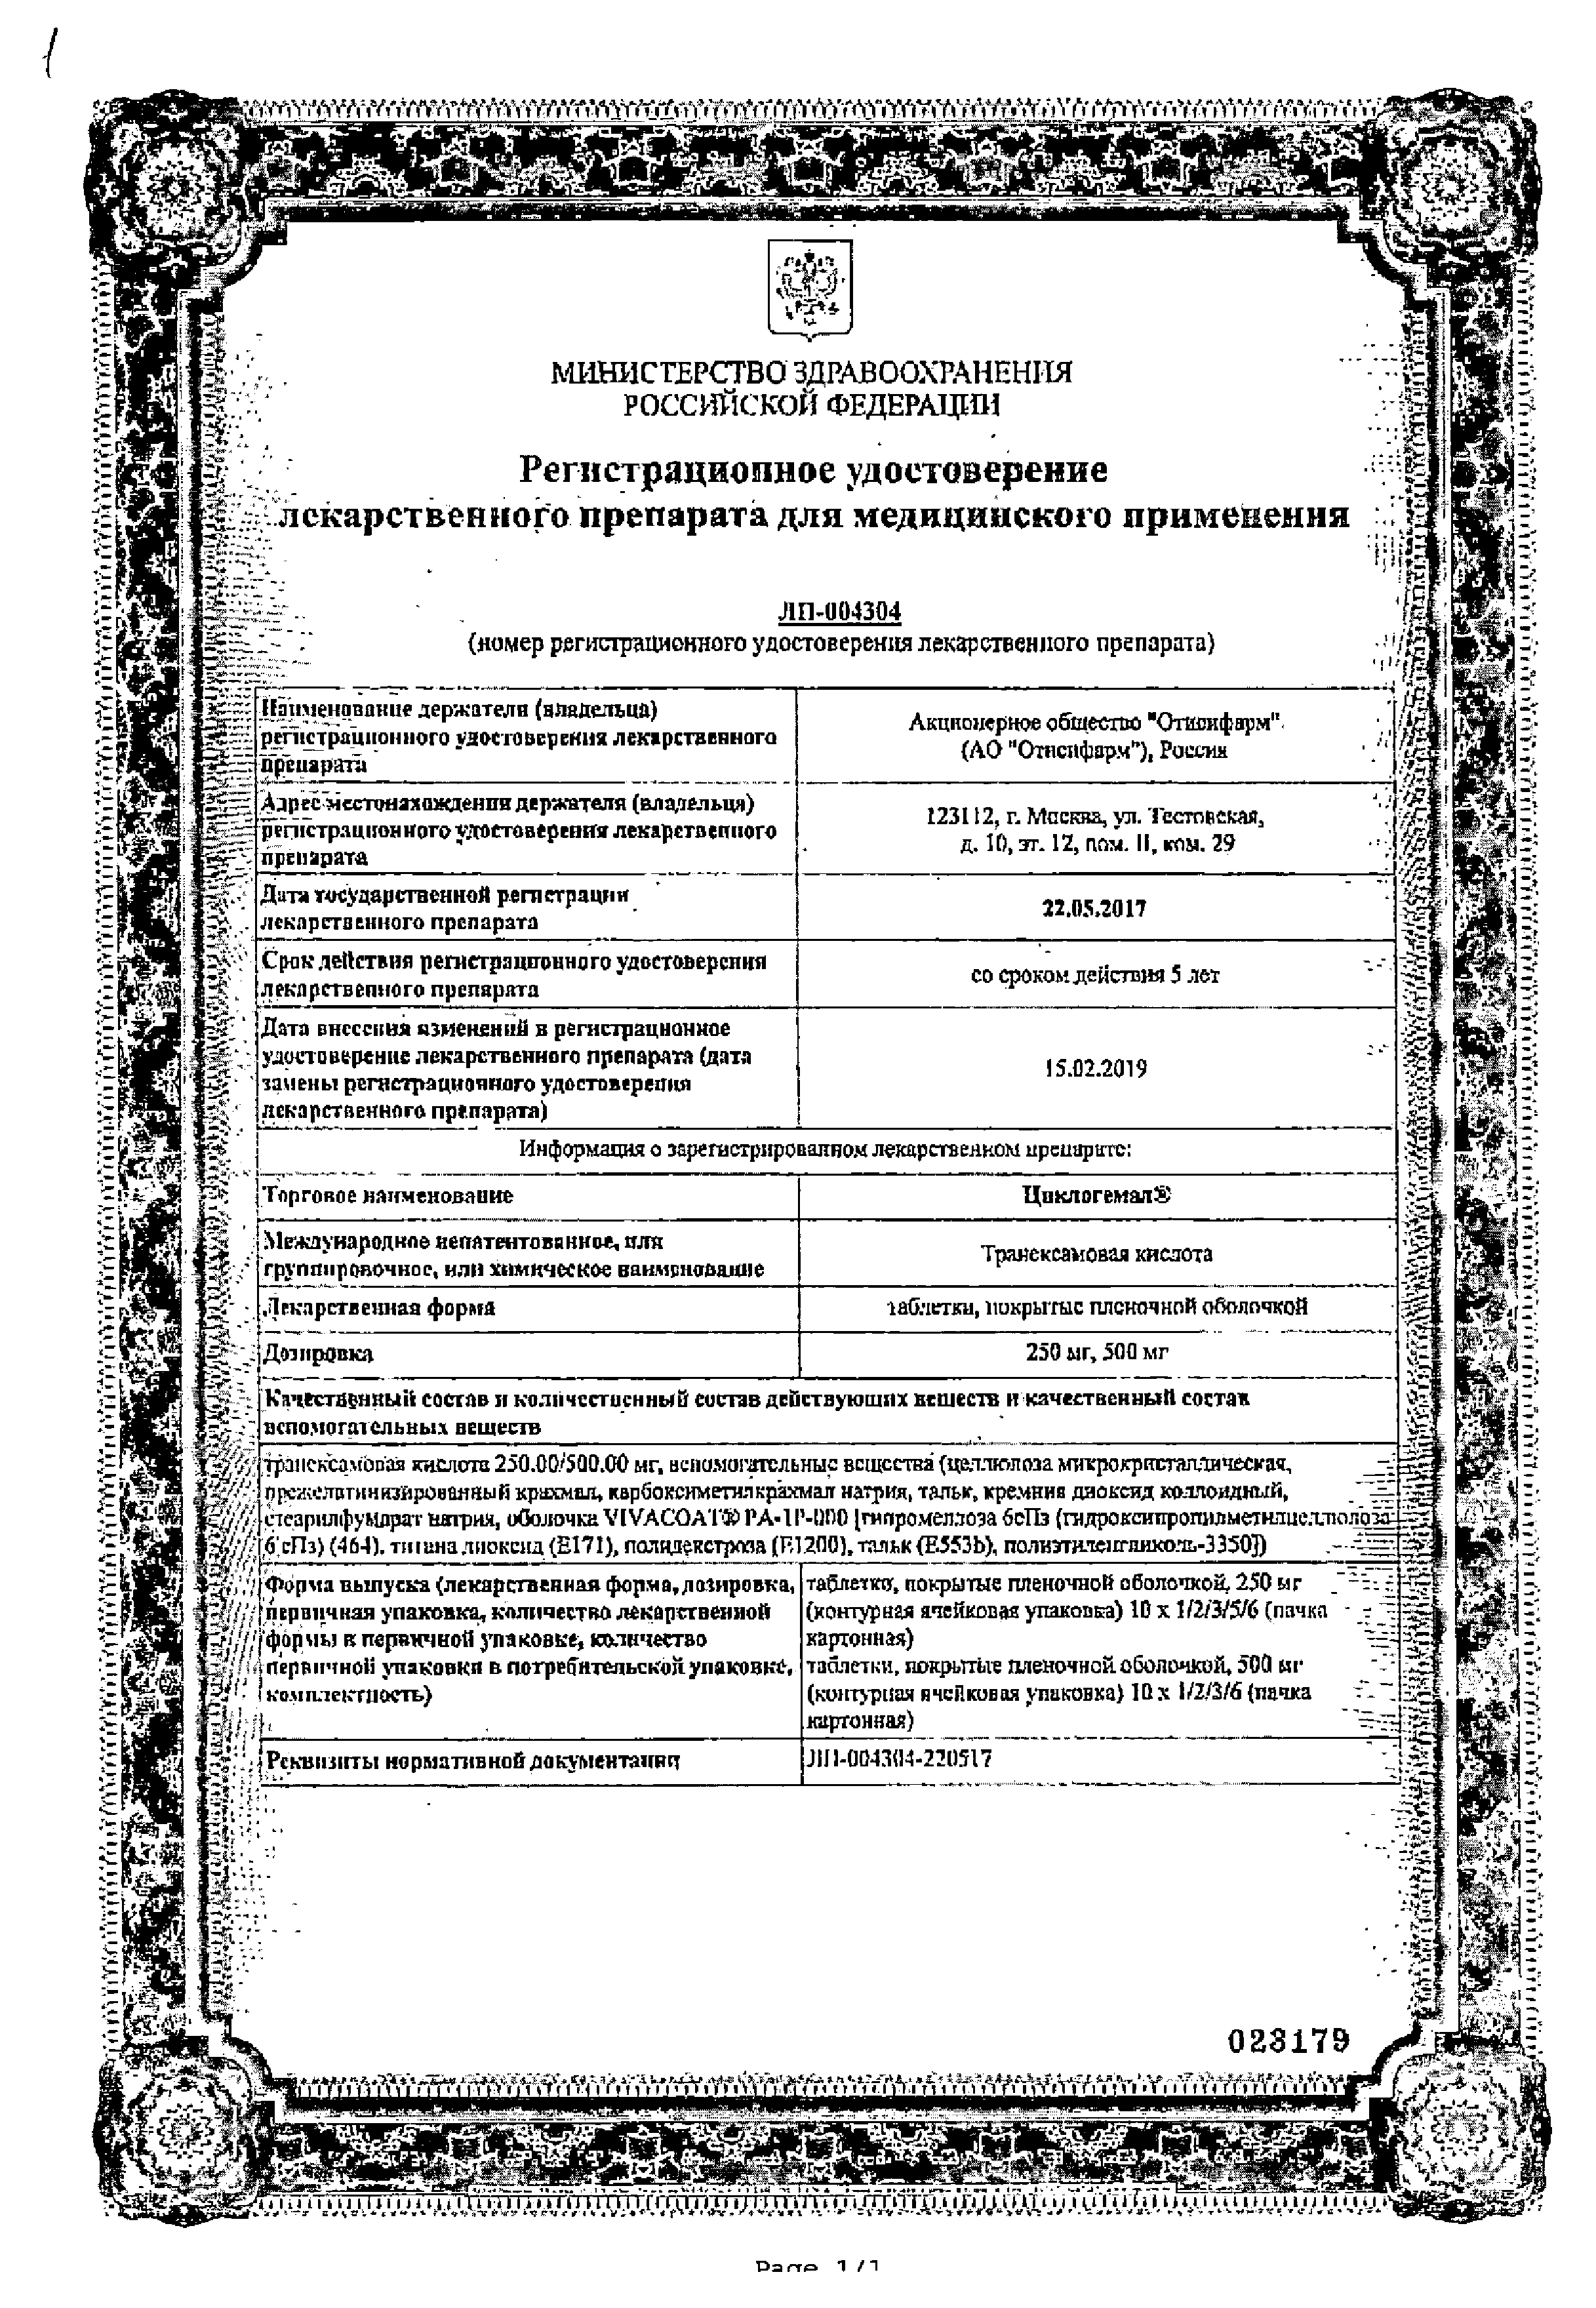 Циклогемал сертификат